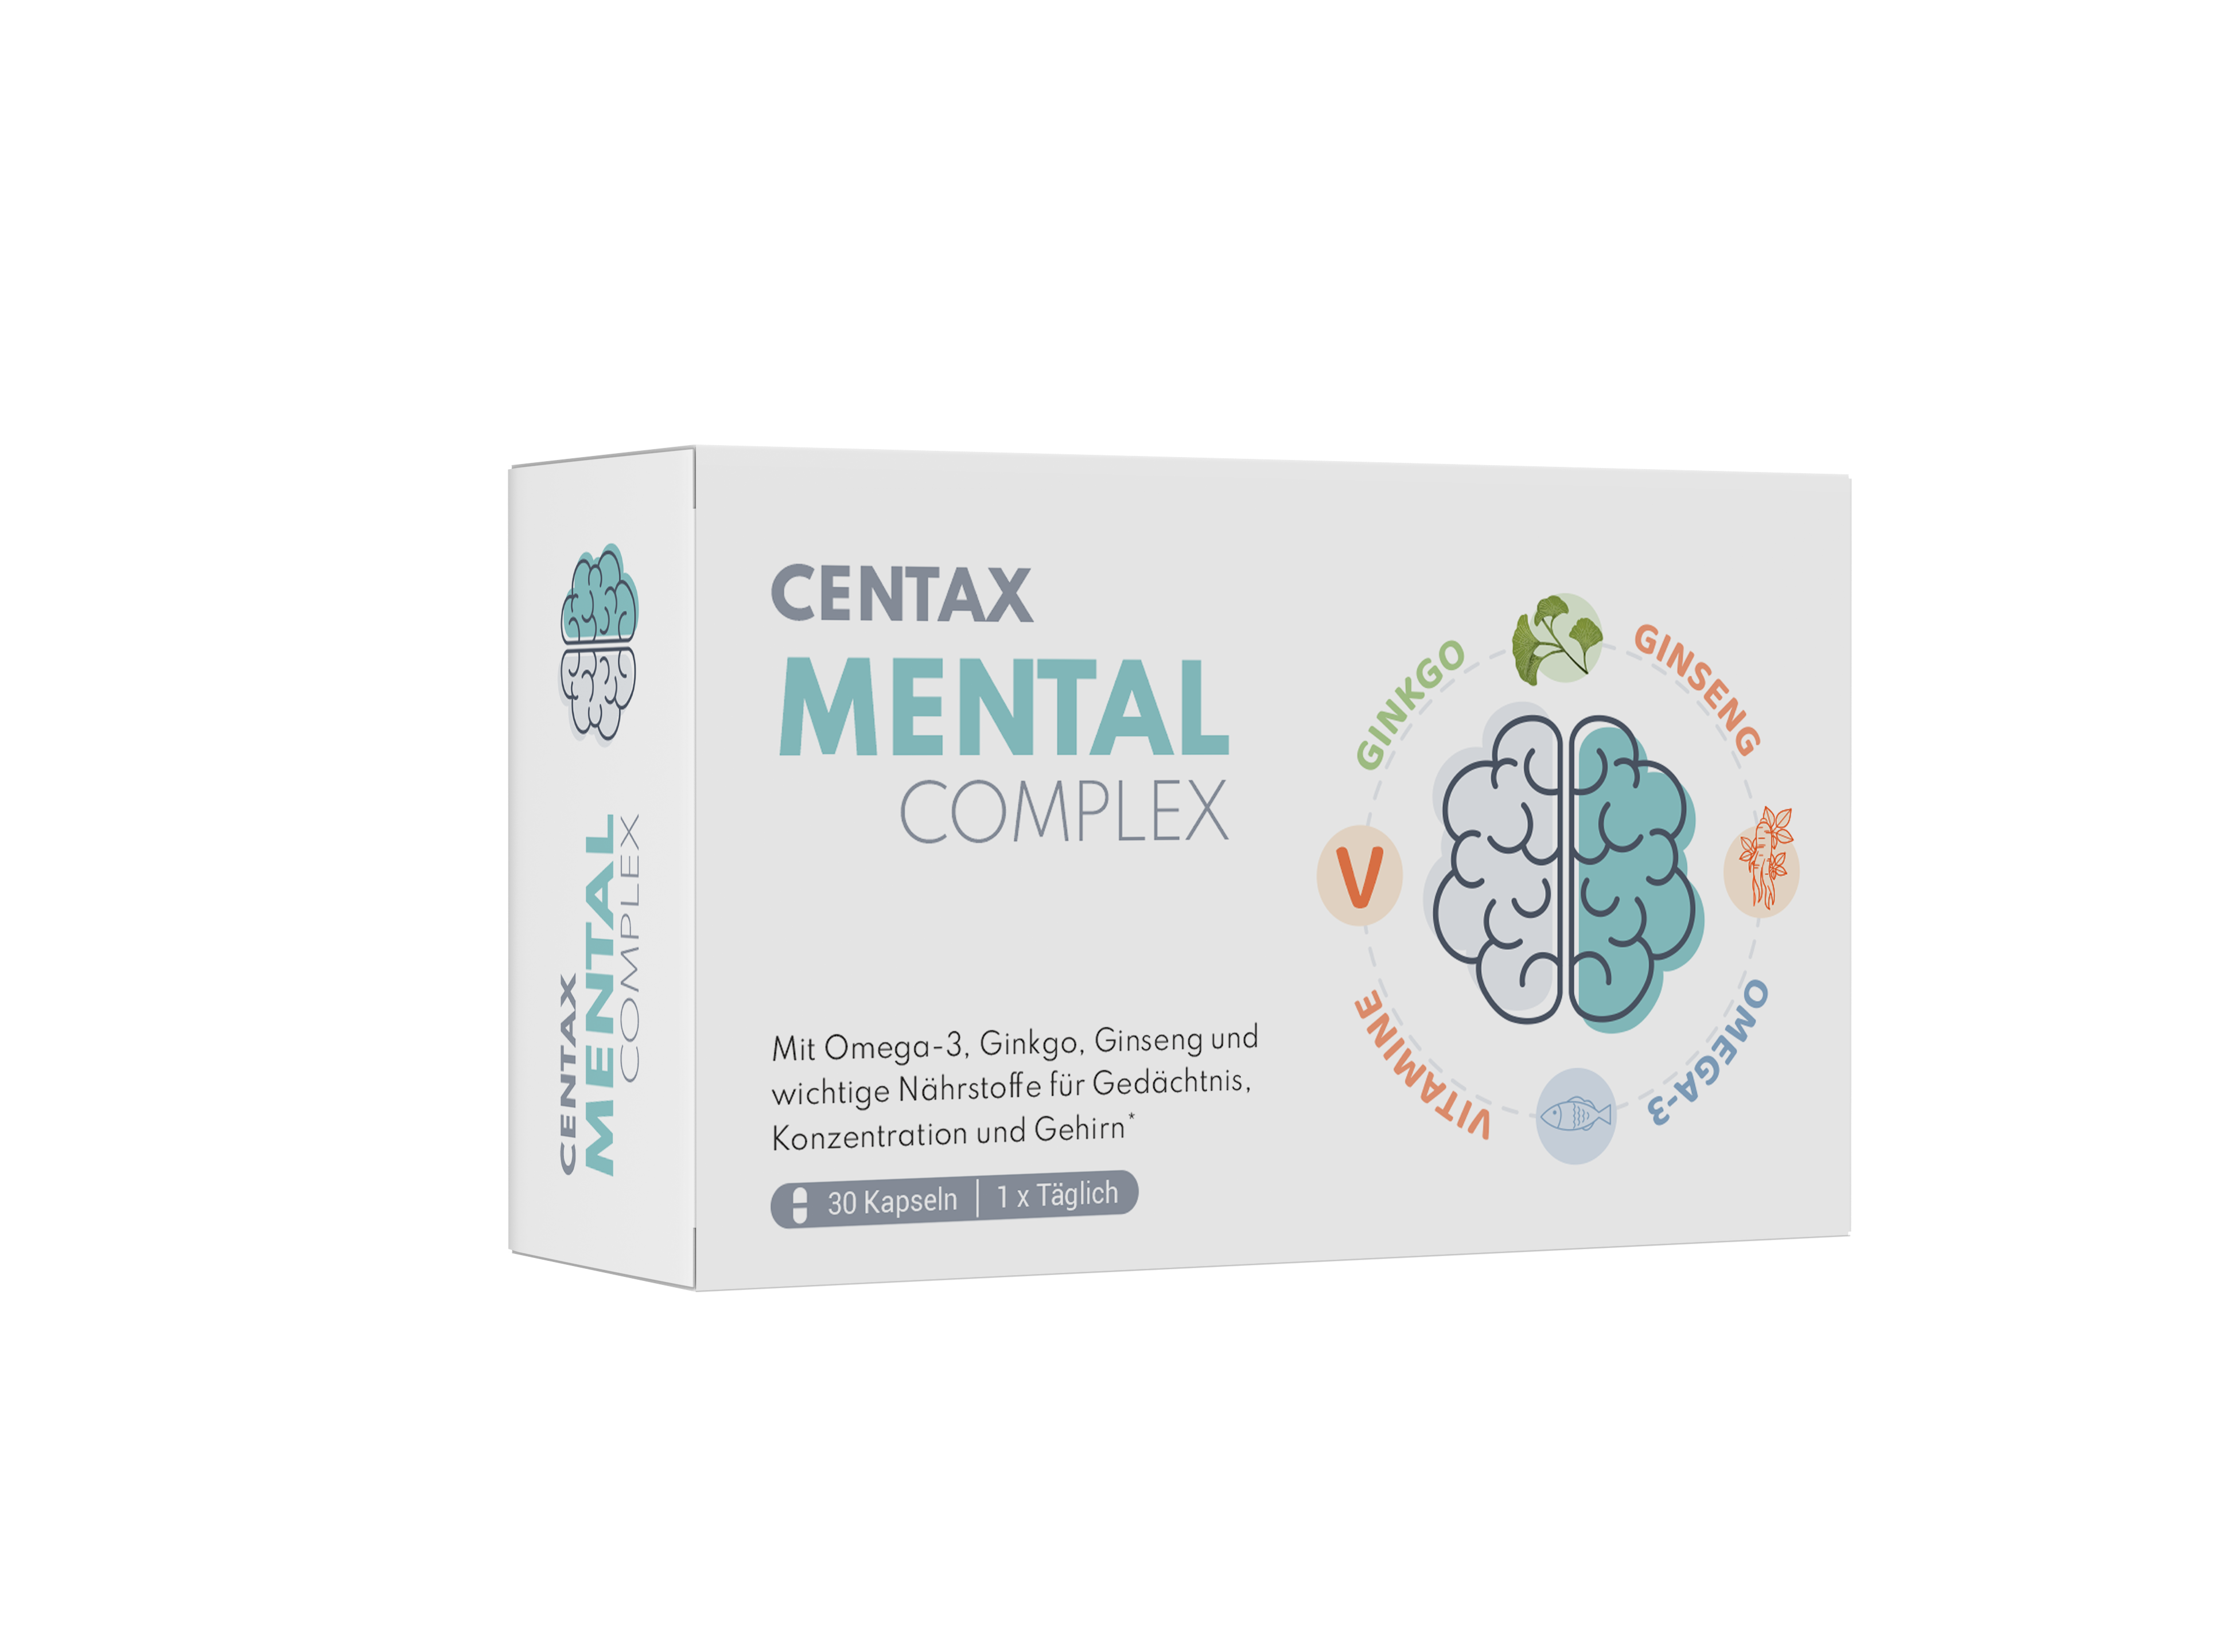 Centax Mental Complex